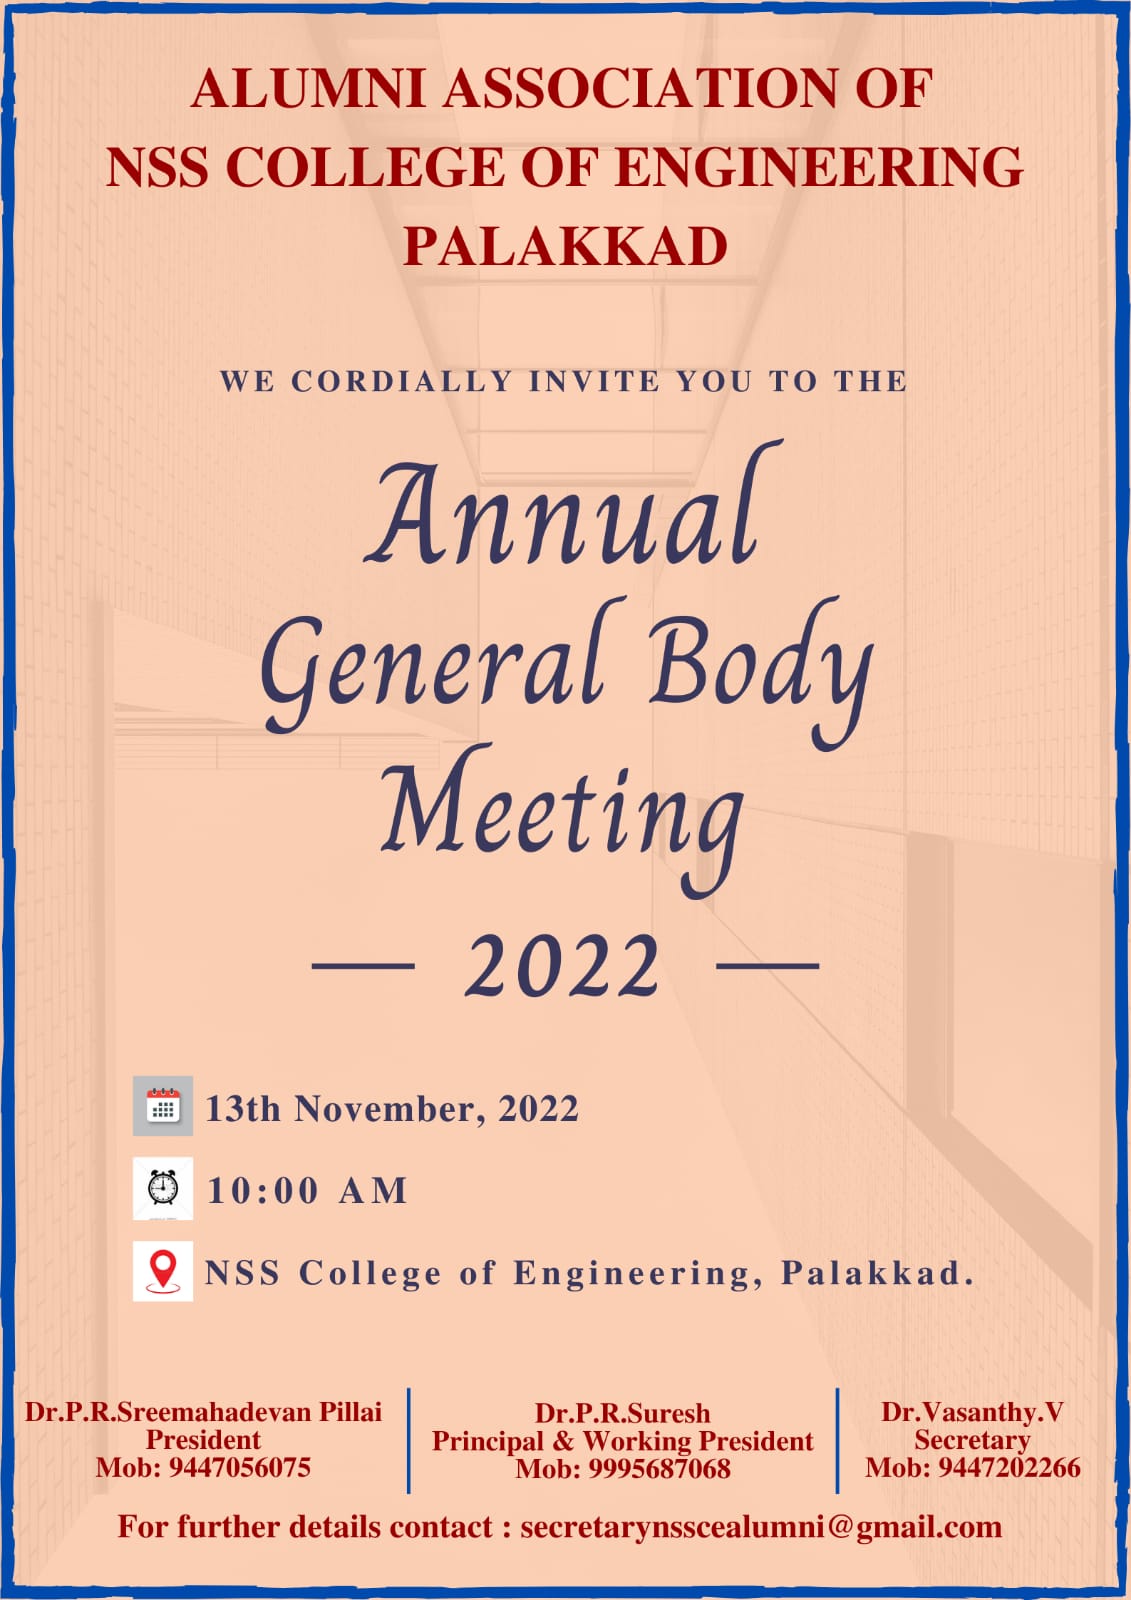 Annual General Body Meeting 2022 - 13th Nov 10:00AM